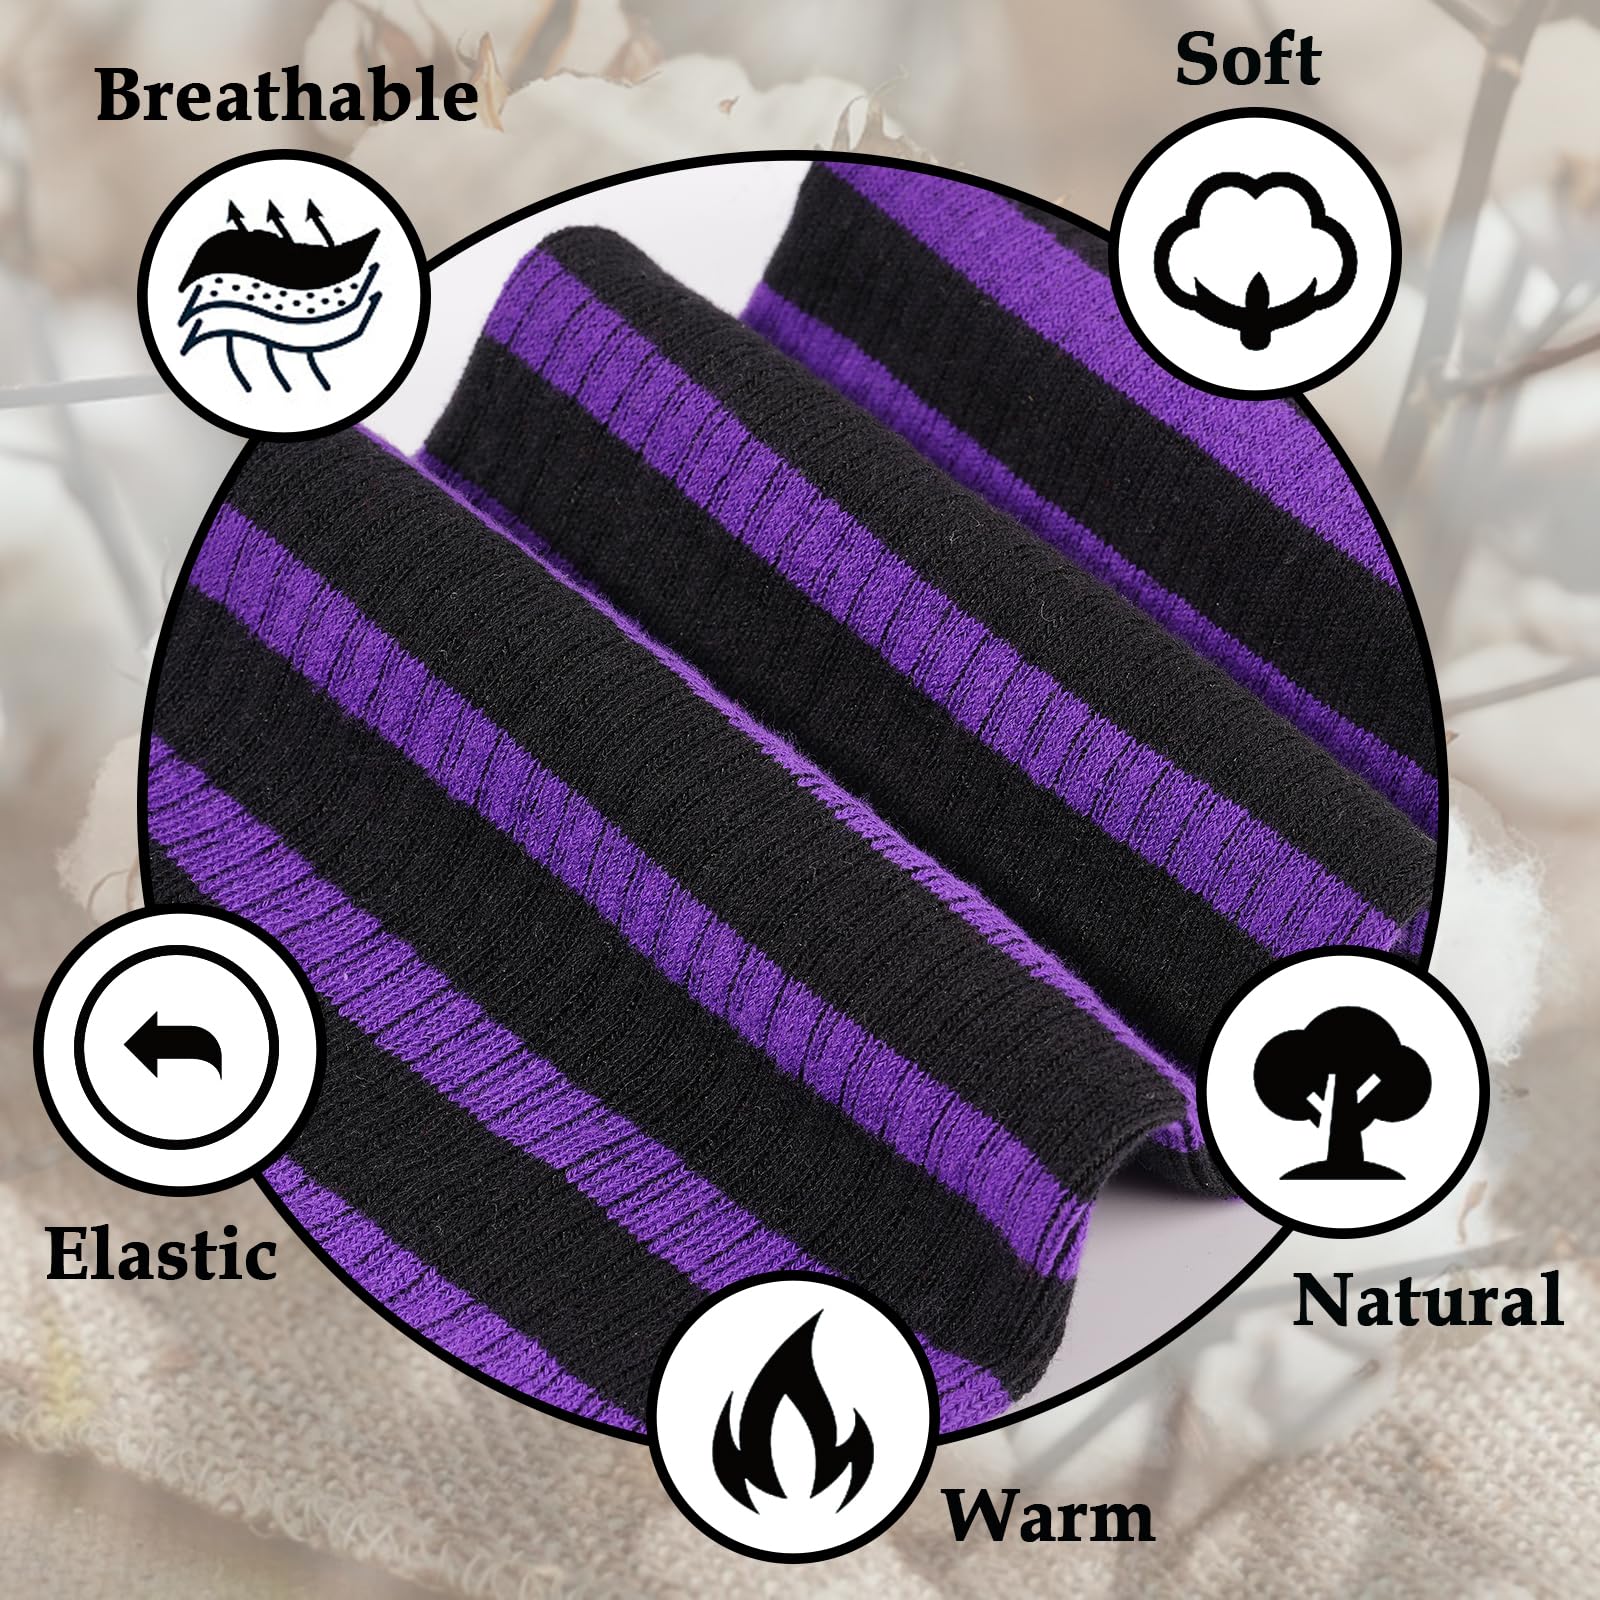 Cotton Plus Size Thigh High Socks-Black & Purple - Moon Wood